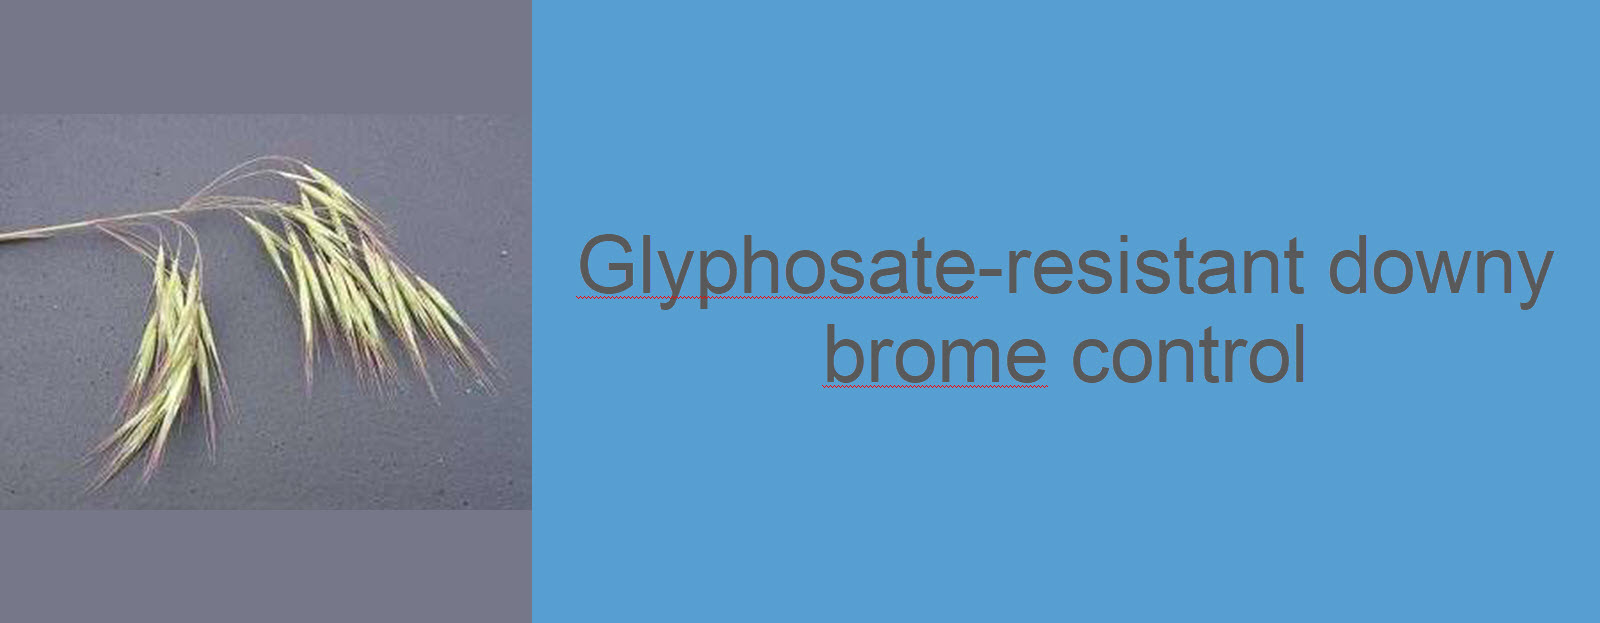 Glyphosate-resistant downy brome control